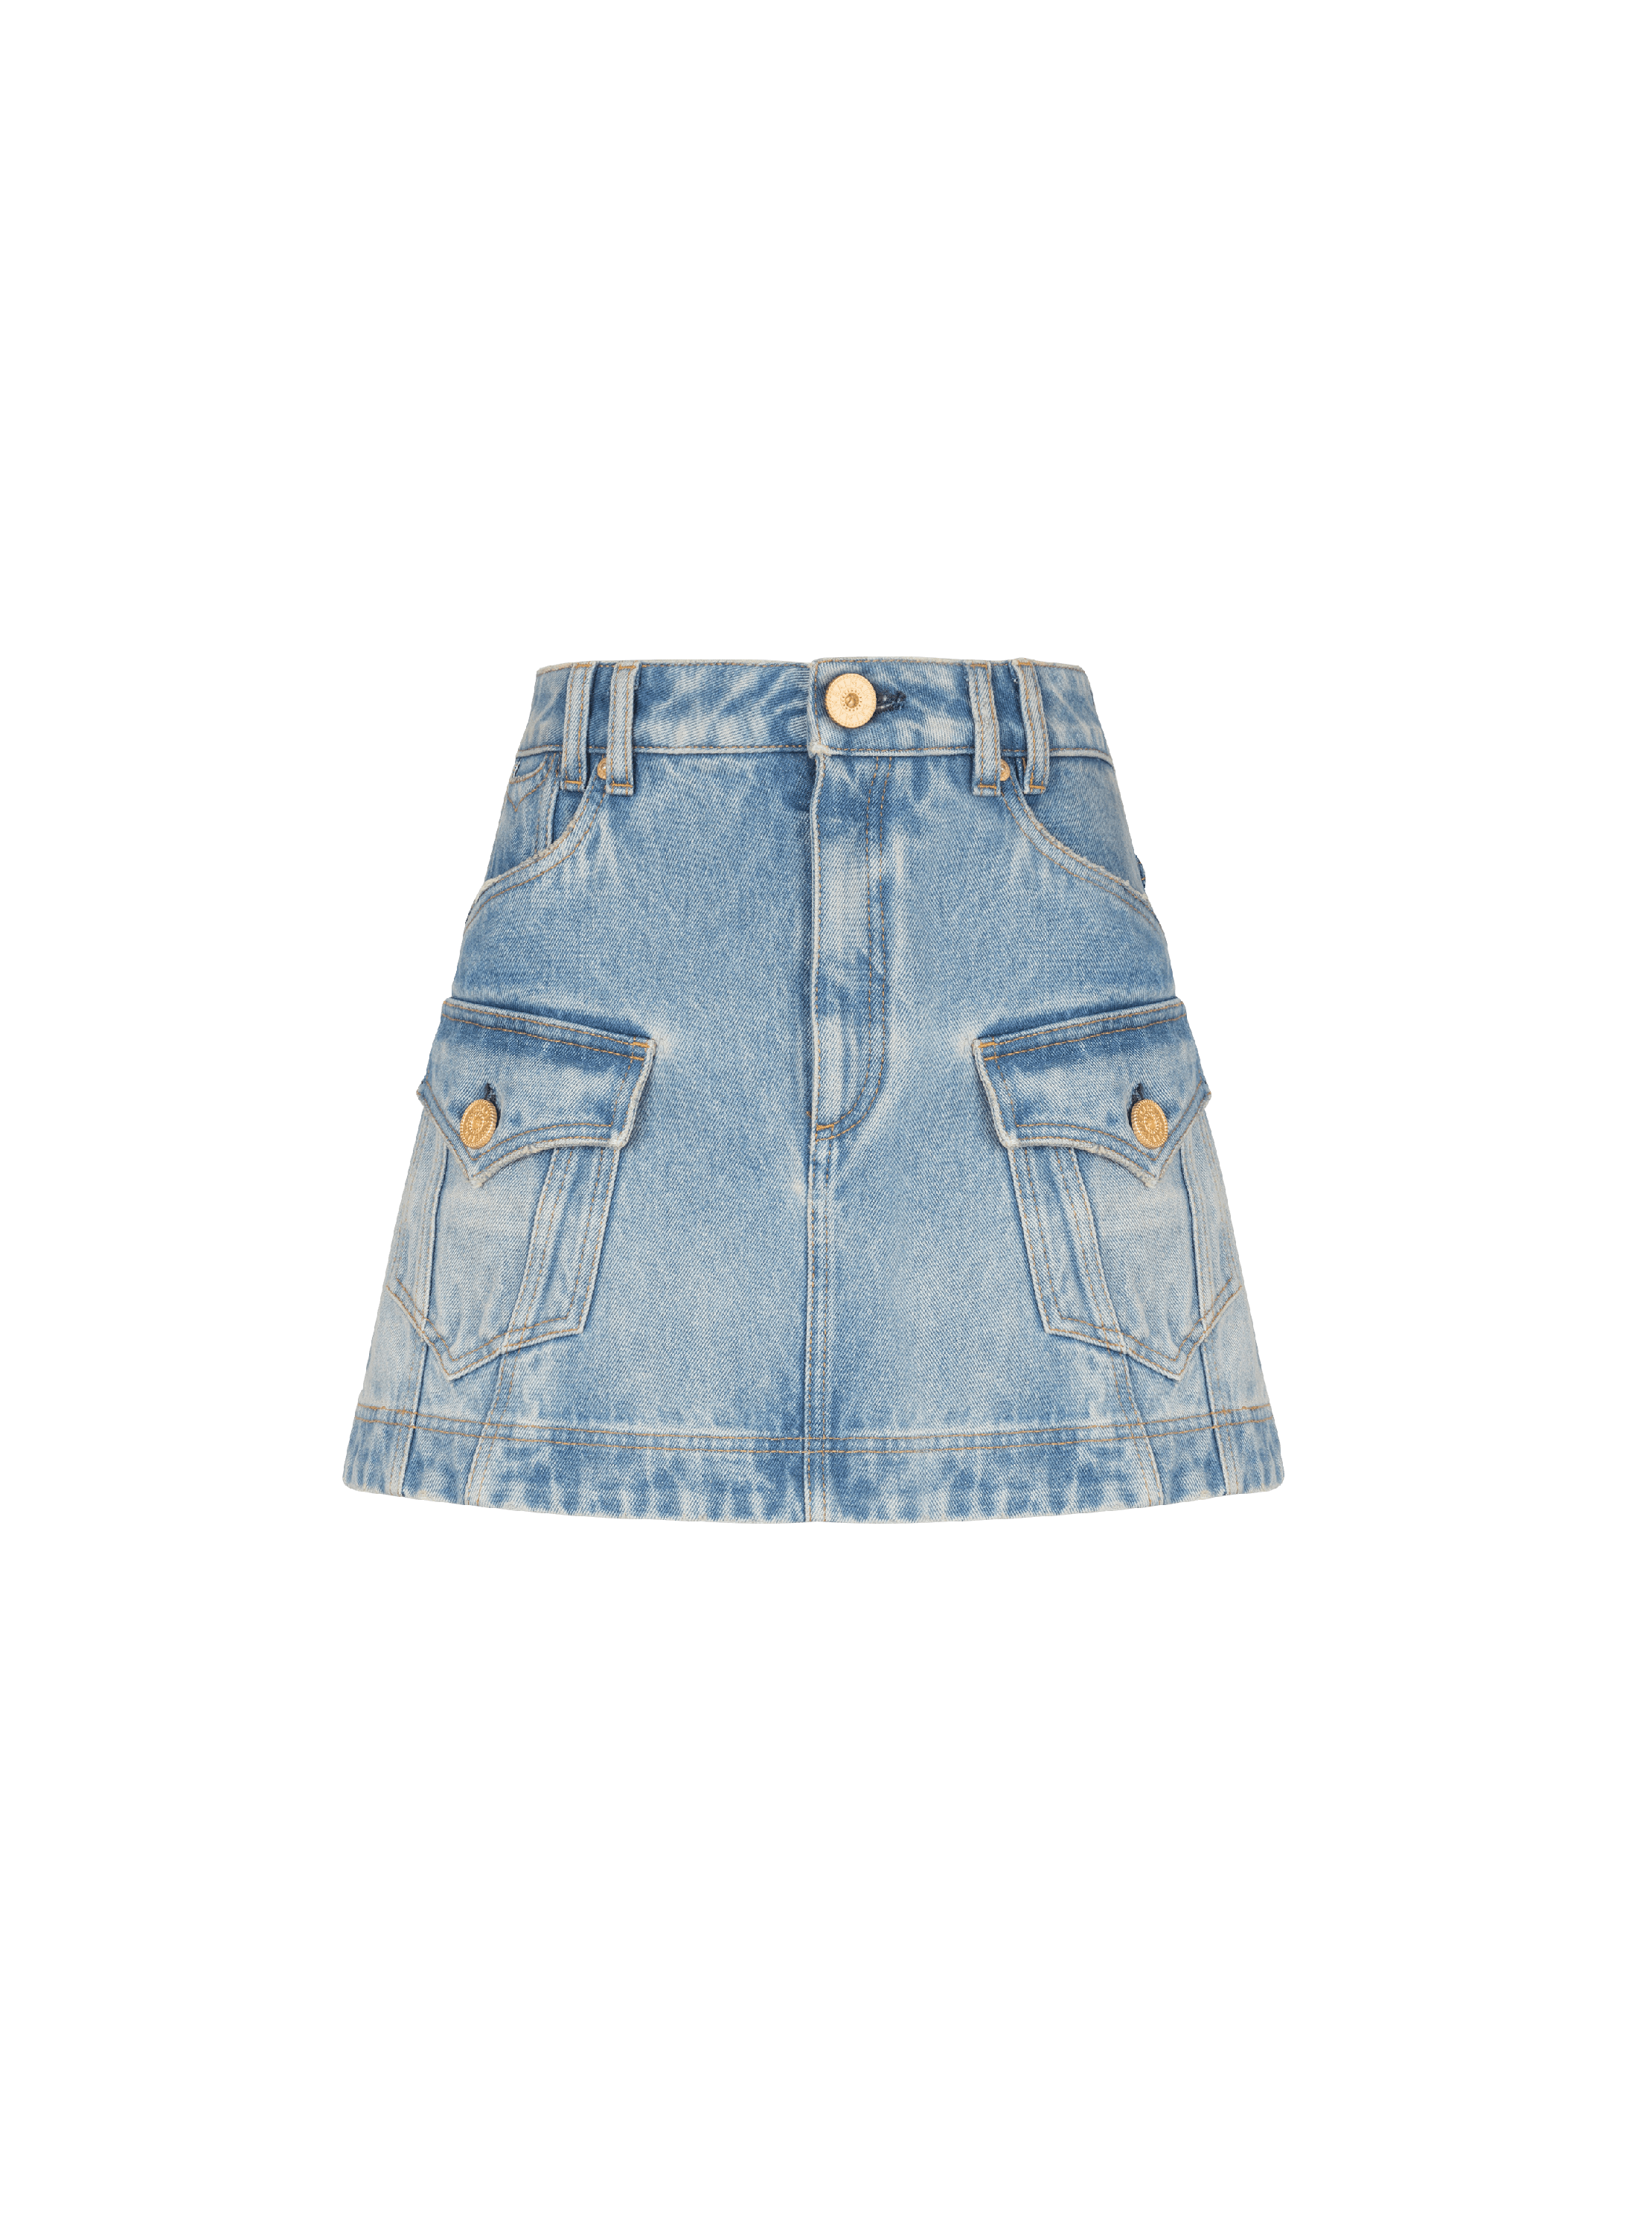 Western denim A-line skirt